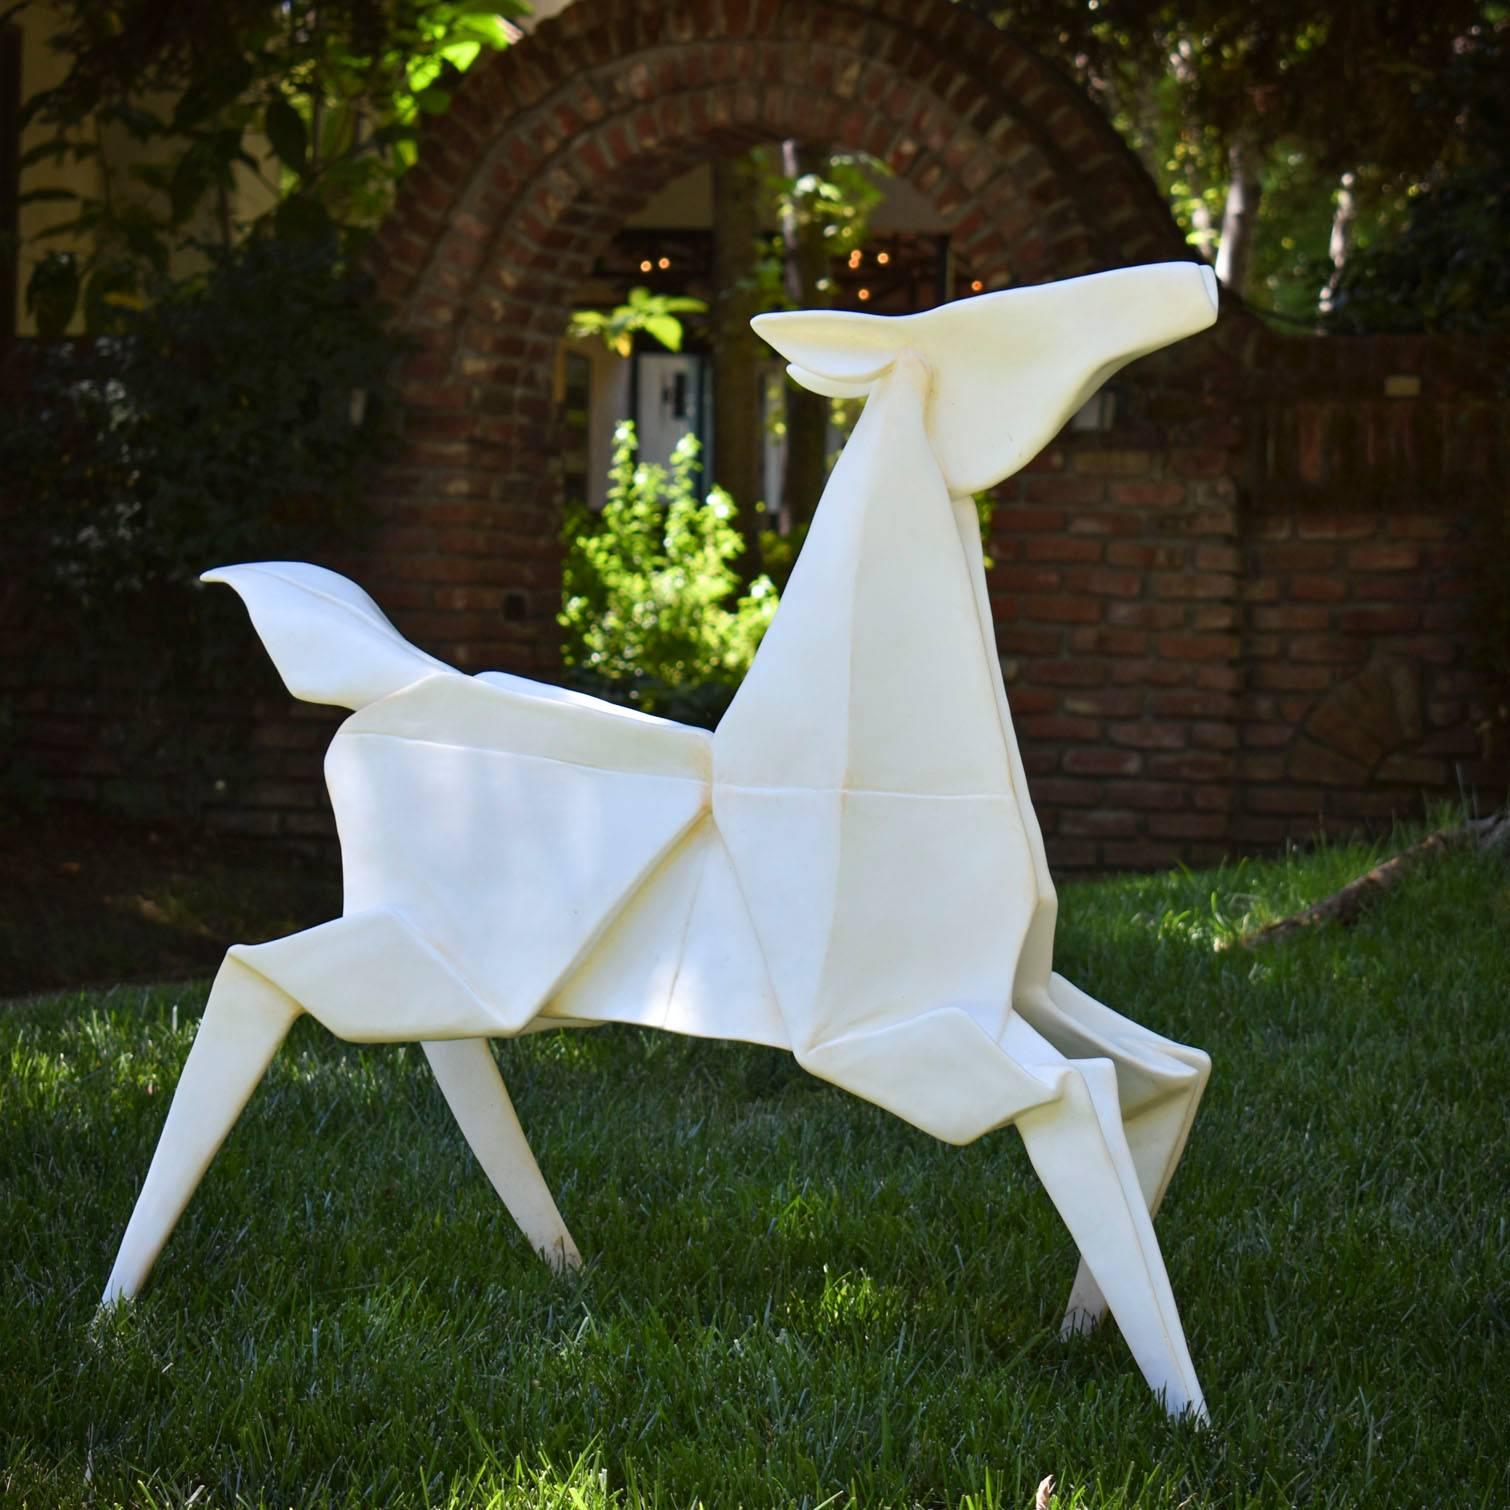 Kevin Box Figurative Sculpture - Dancing Pony